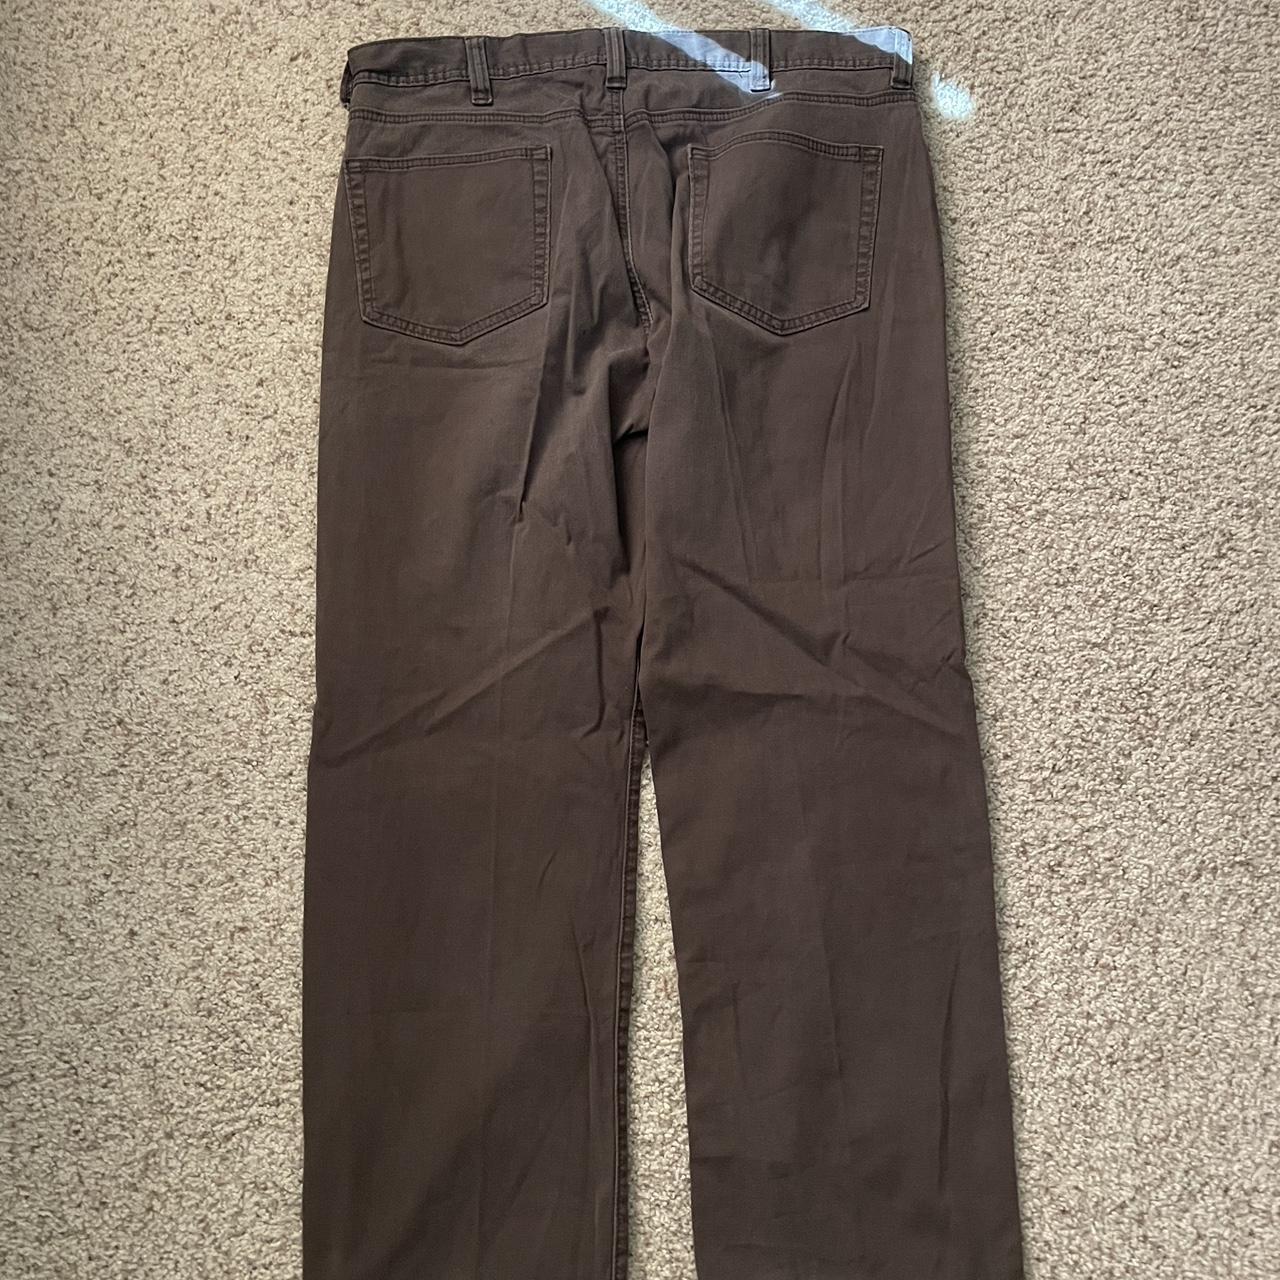 Costco Men's Brown Trousers (2)